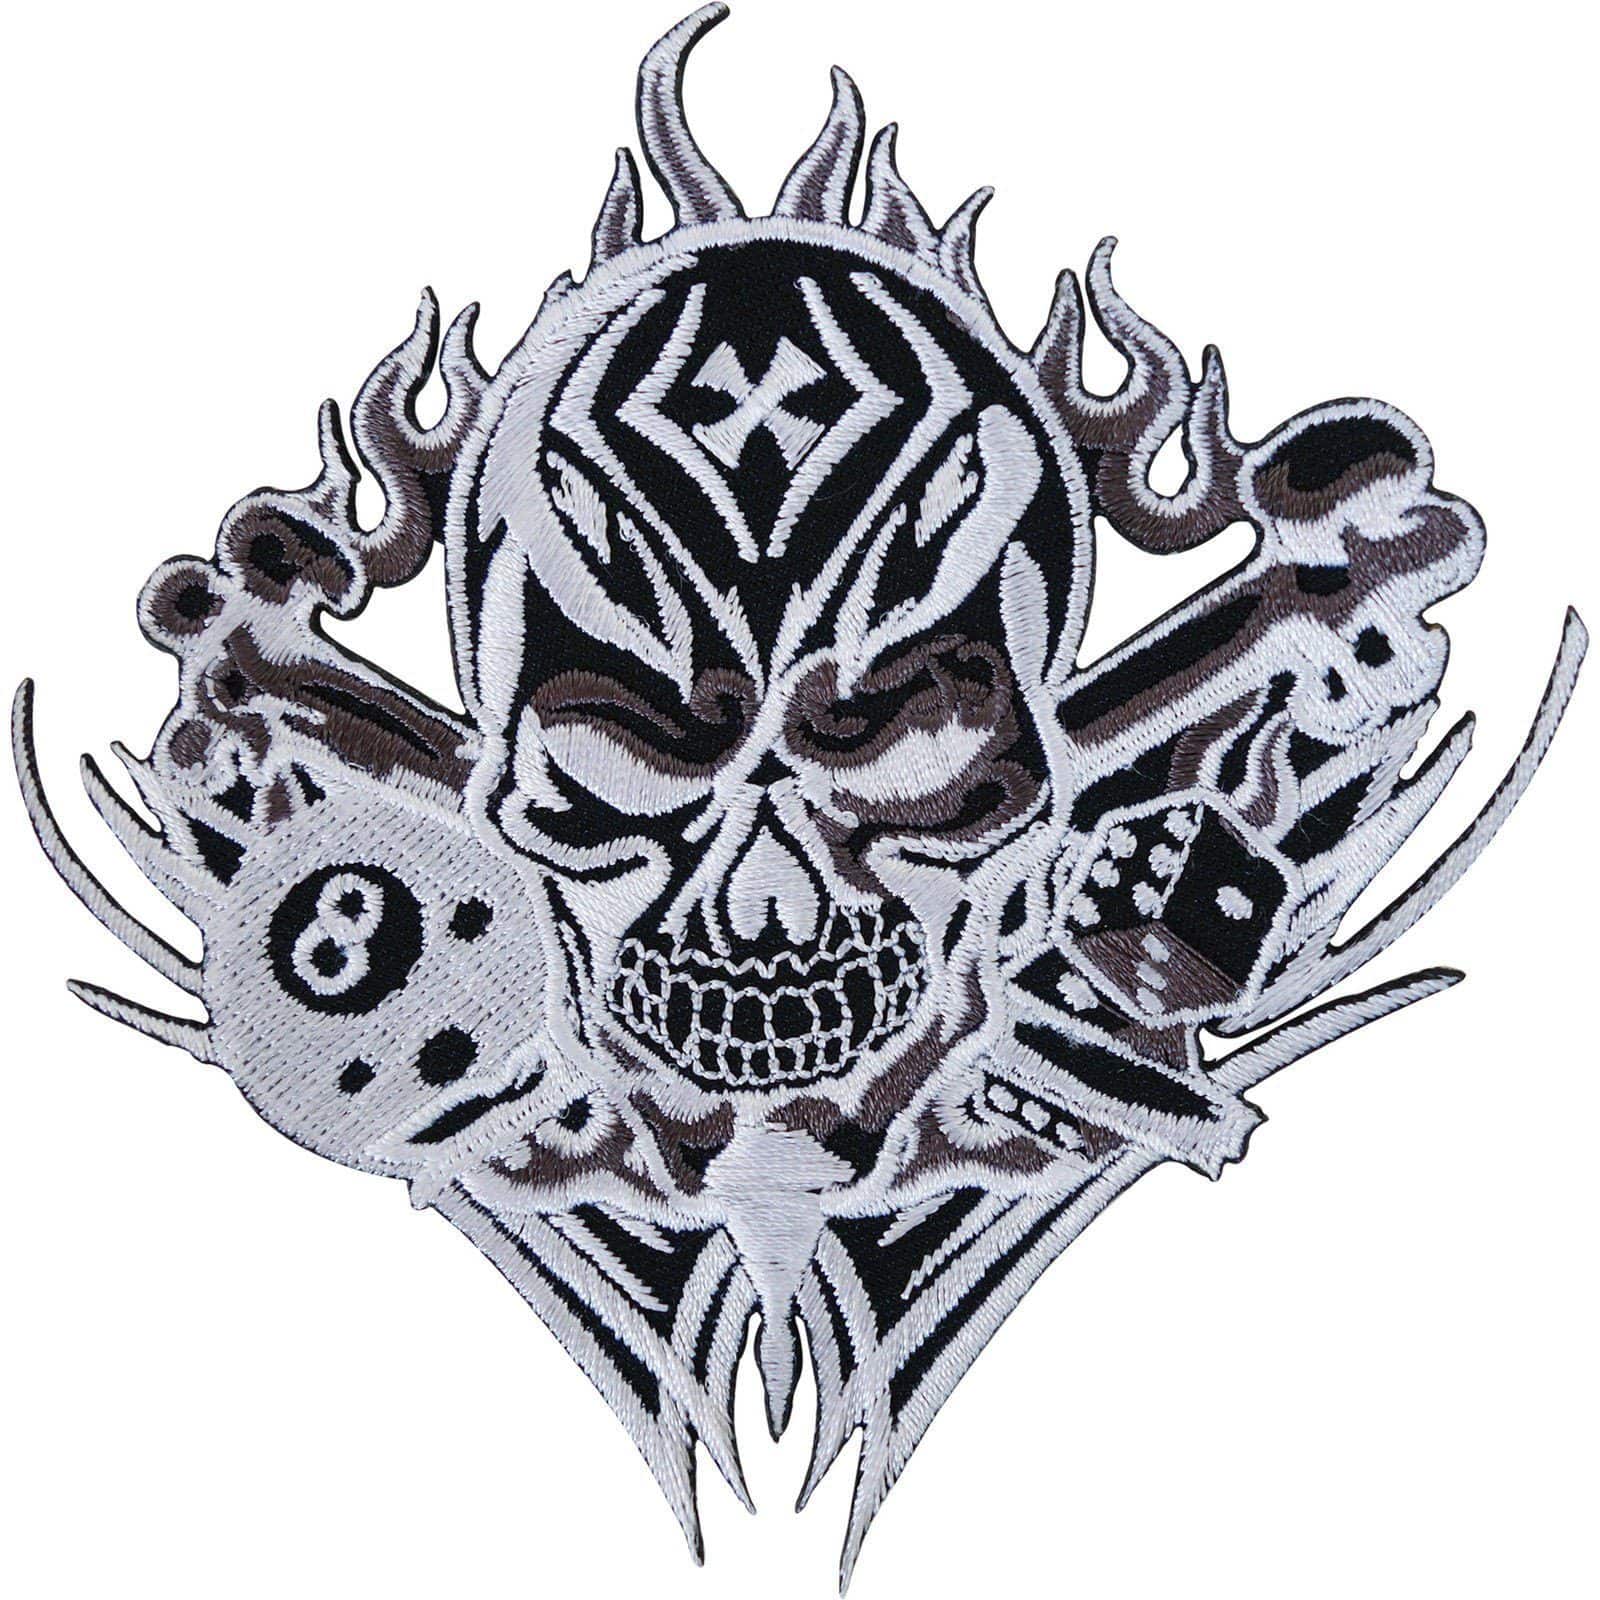 Skull Bones Dice 8 Ball Cross Embroidered Iron / Sew On Patch Biker Jacket Badge